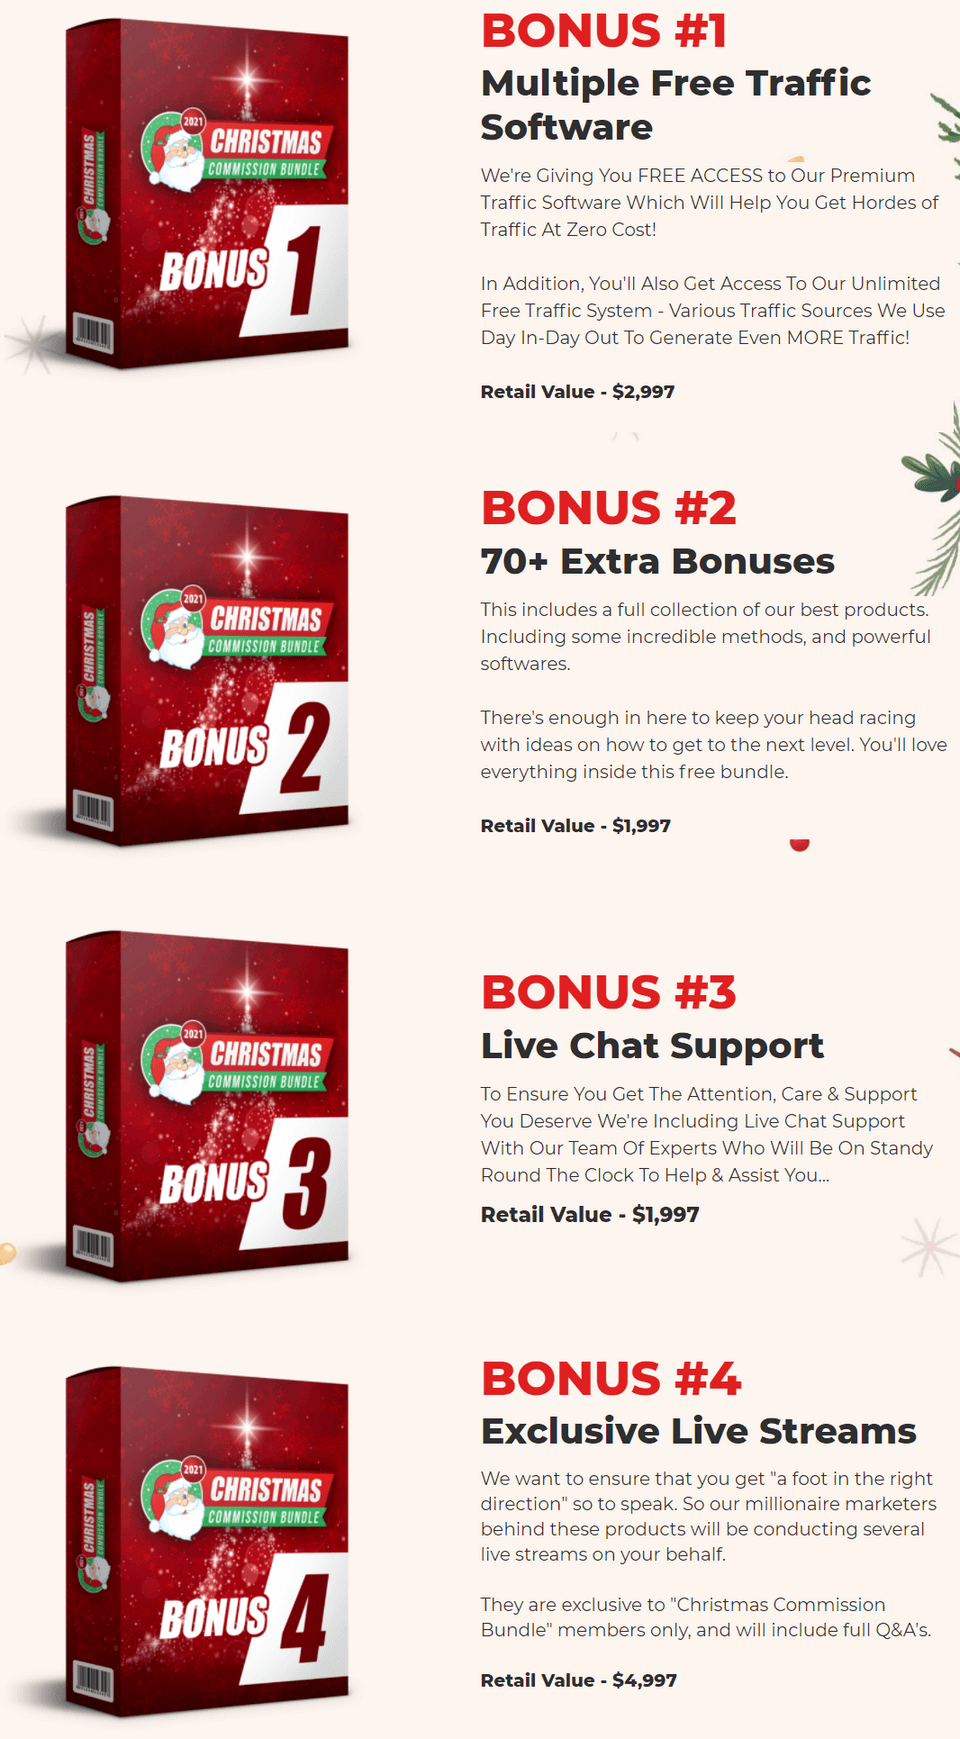 Christmas-Commission-Bundle-bonus-1